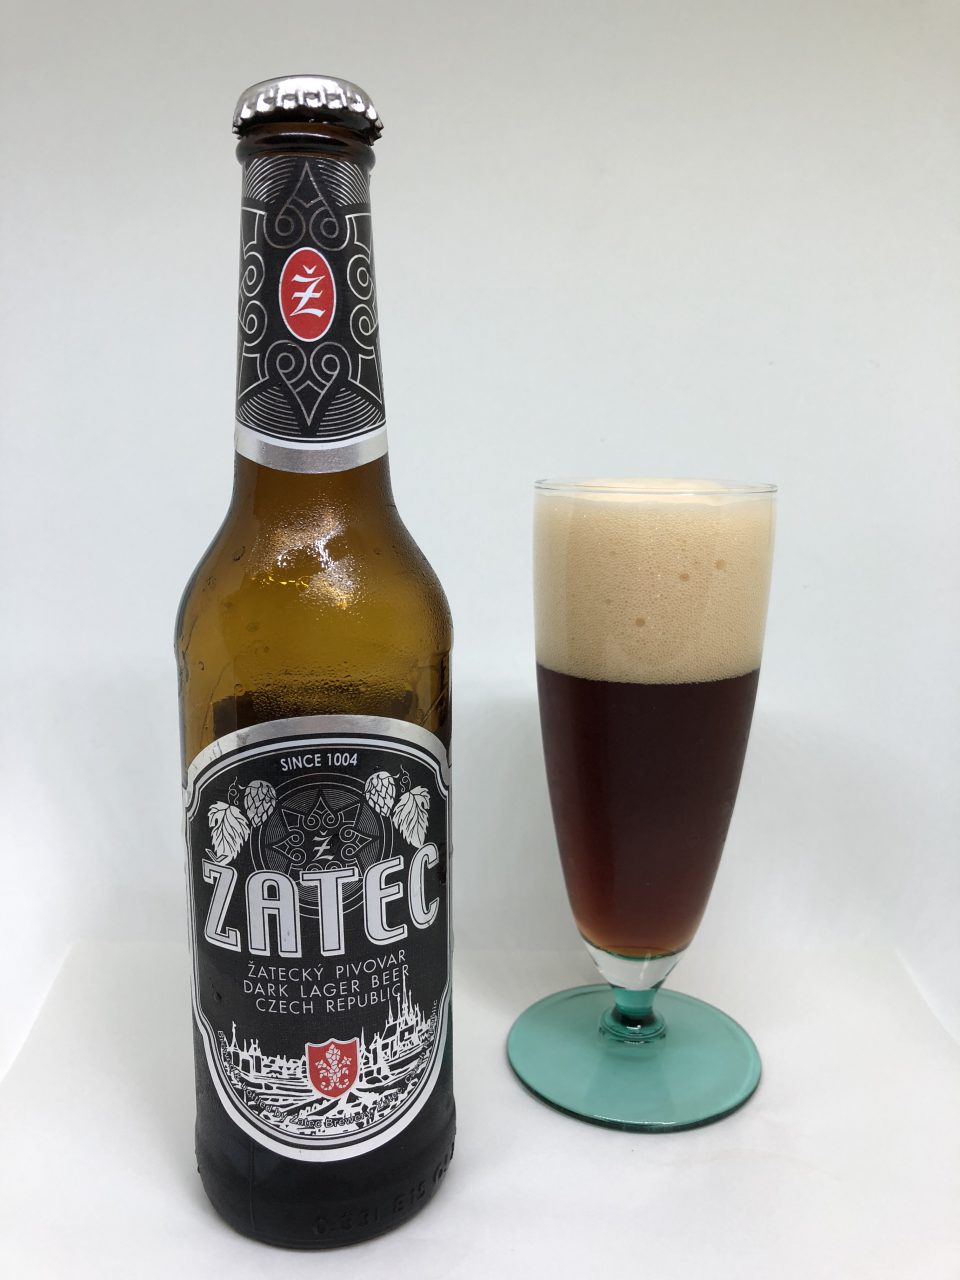 Zatecky Dark Label クラフトビール大好き